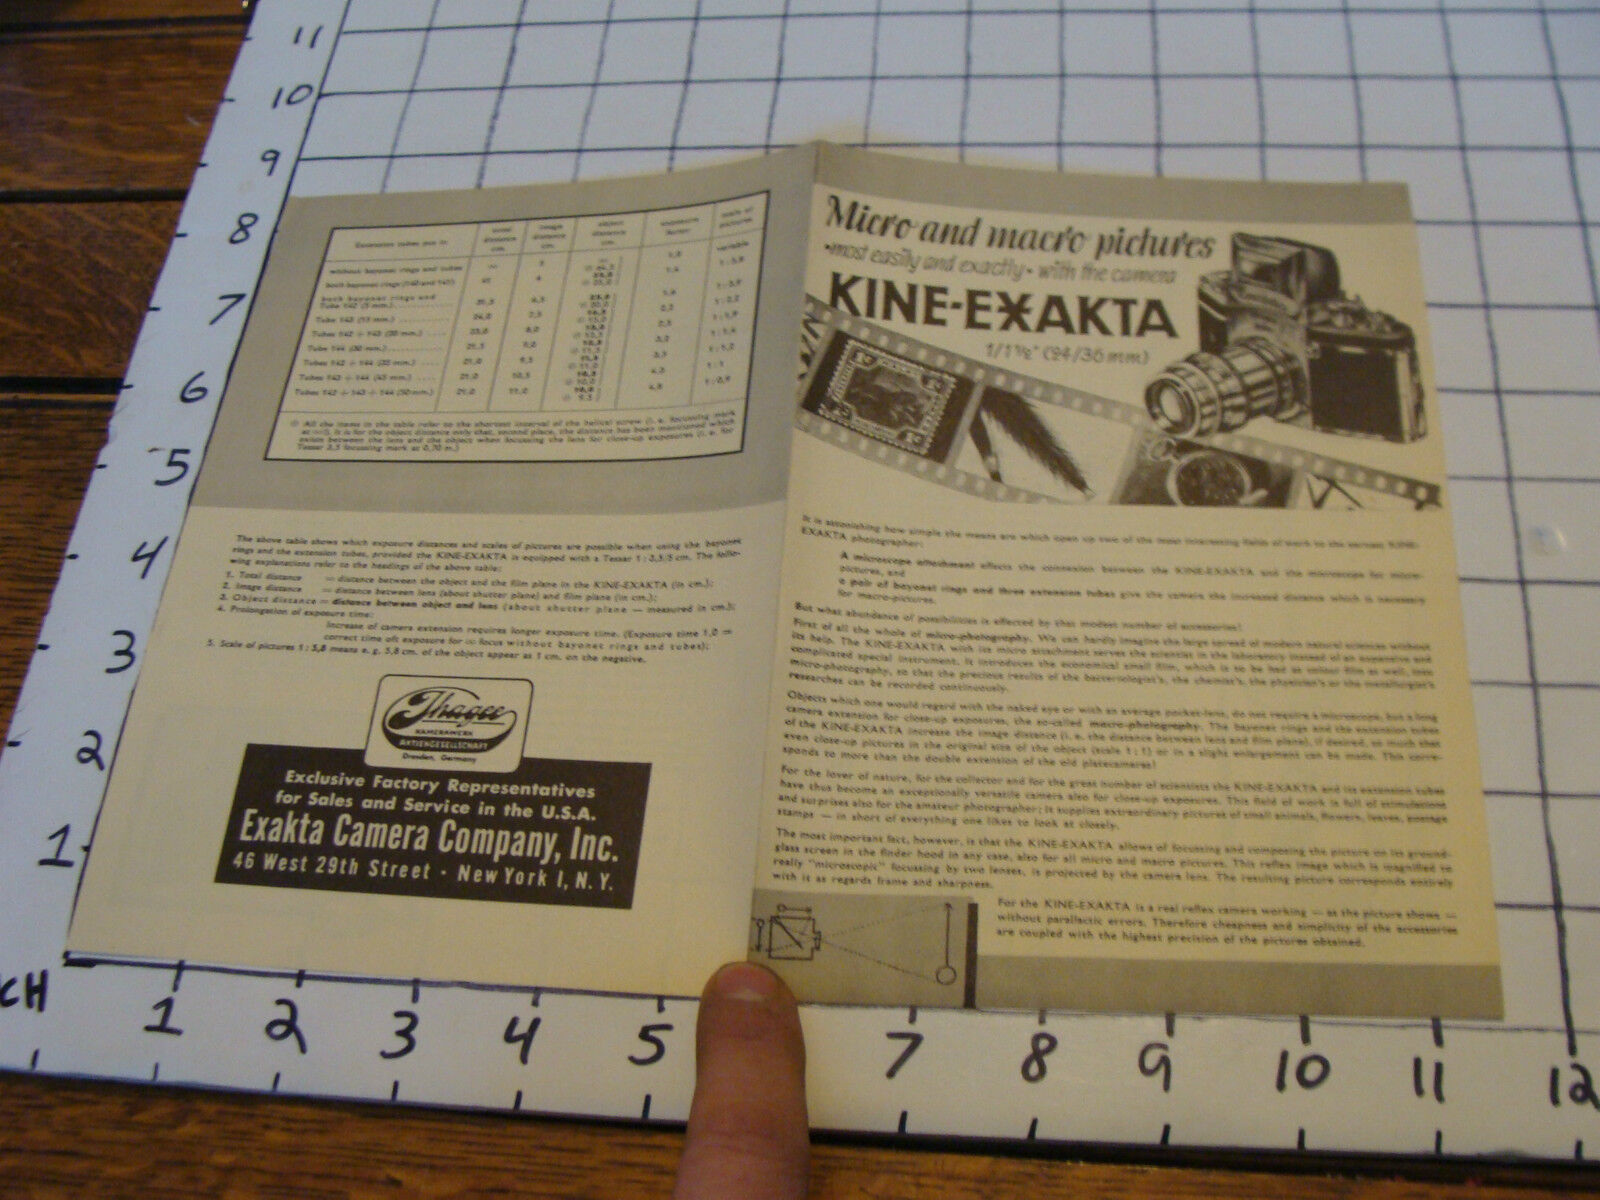 vintage paper: KINE-EXAKTA micro & macro pictures brochure, undated early